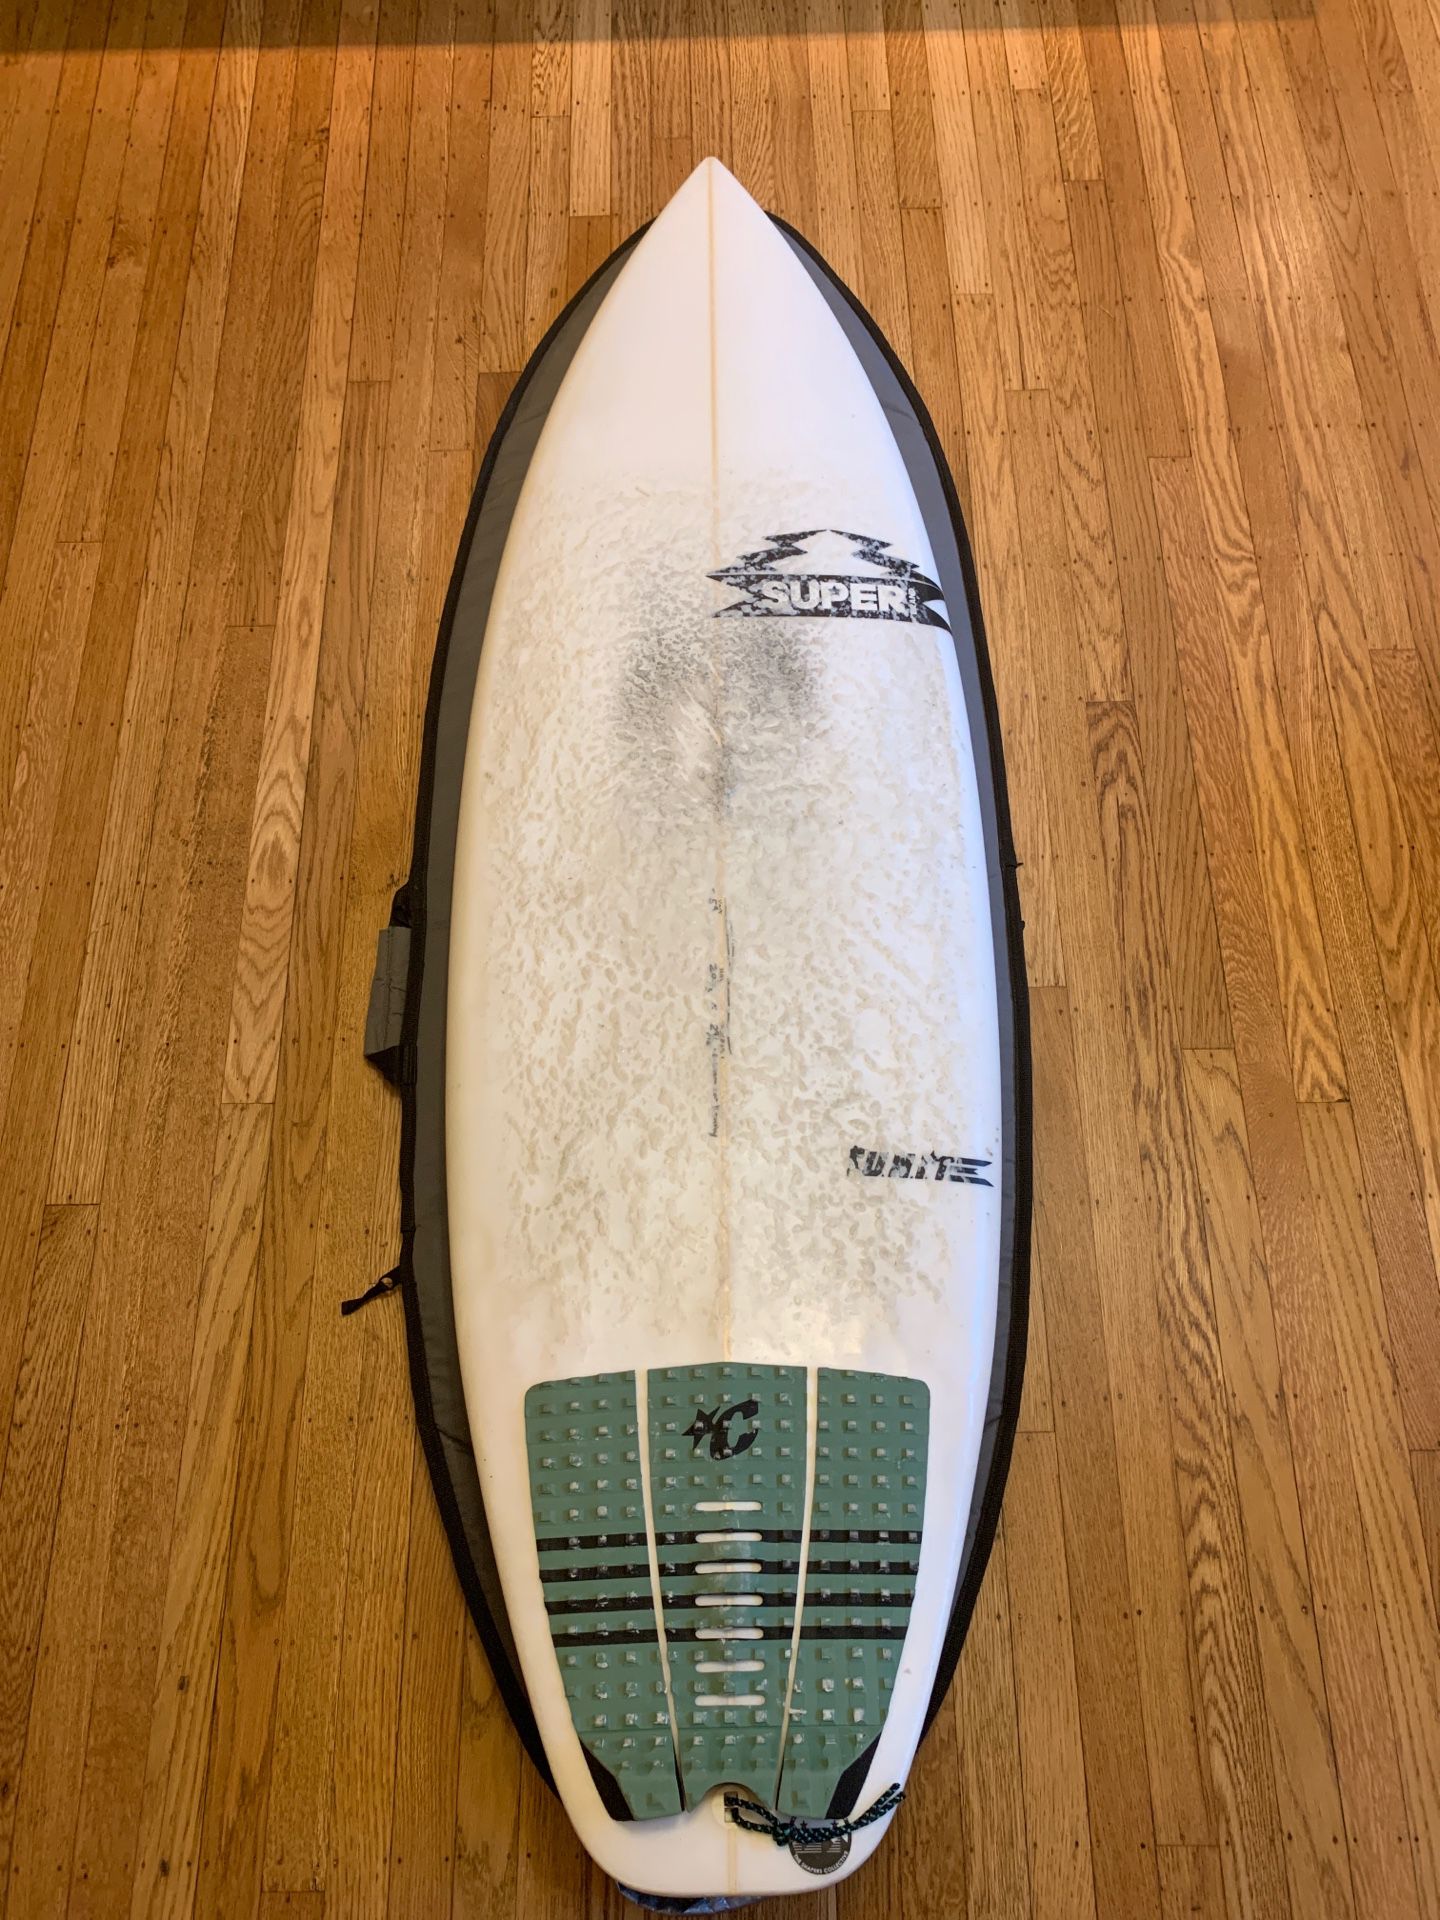 Surfboard - Super Brand - Unit model 5’9